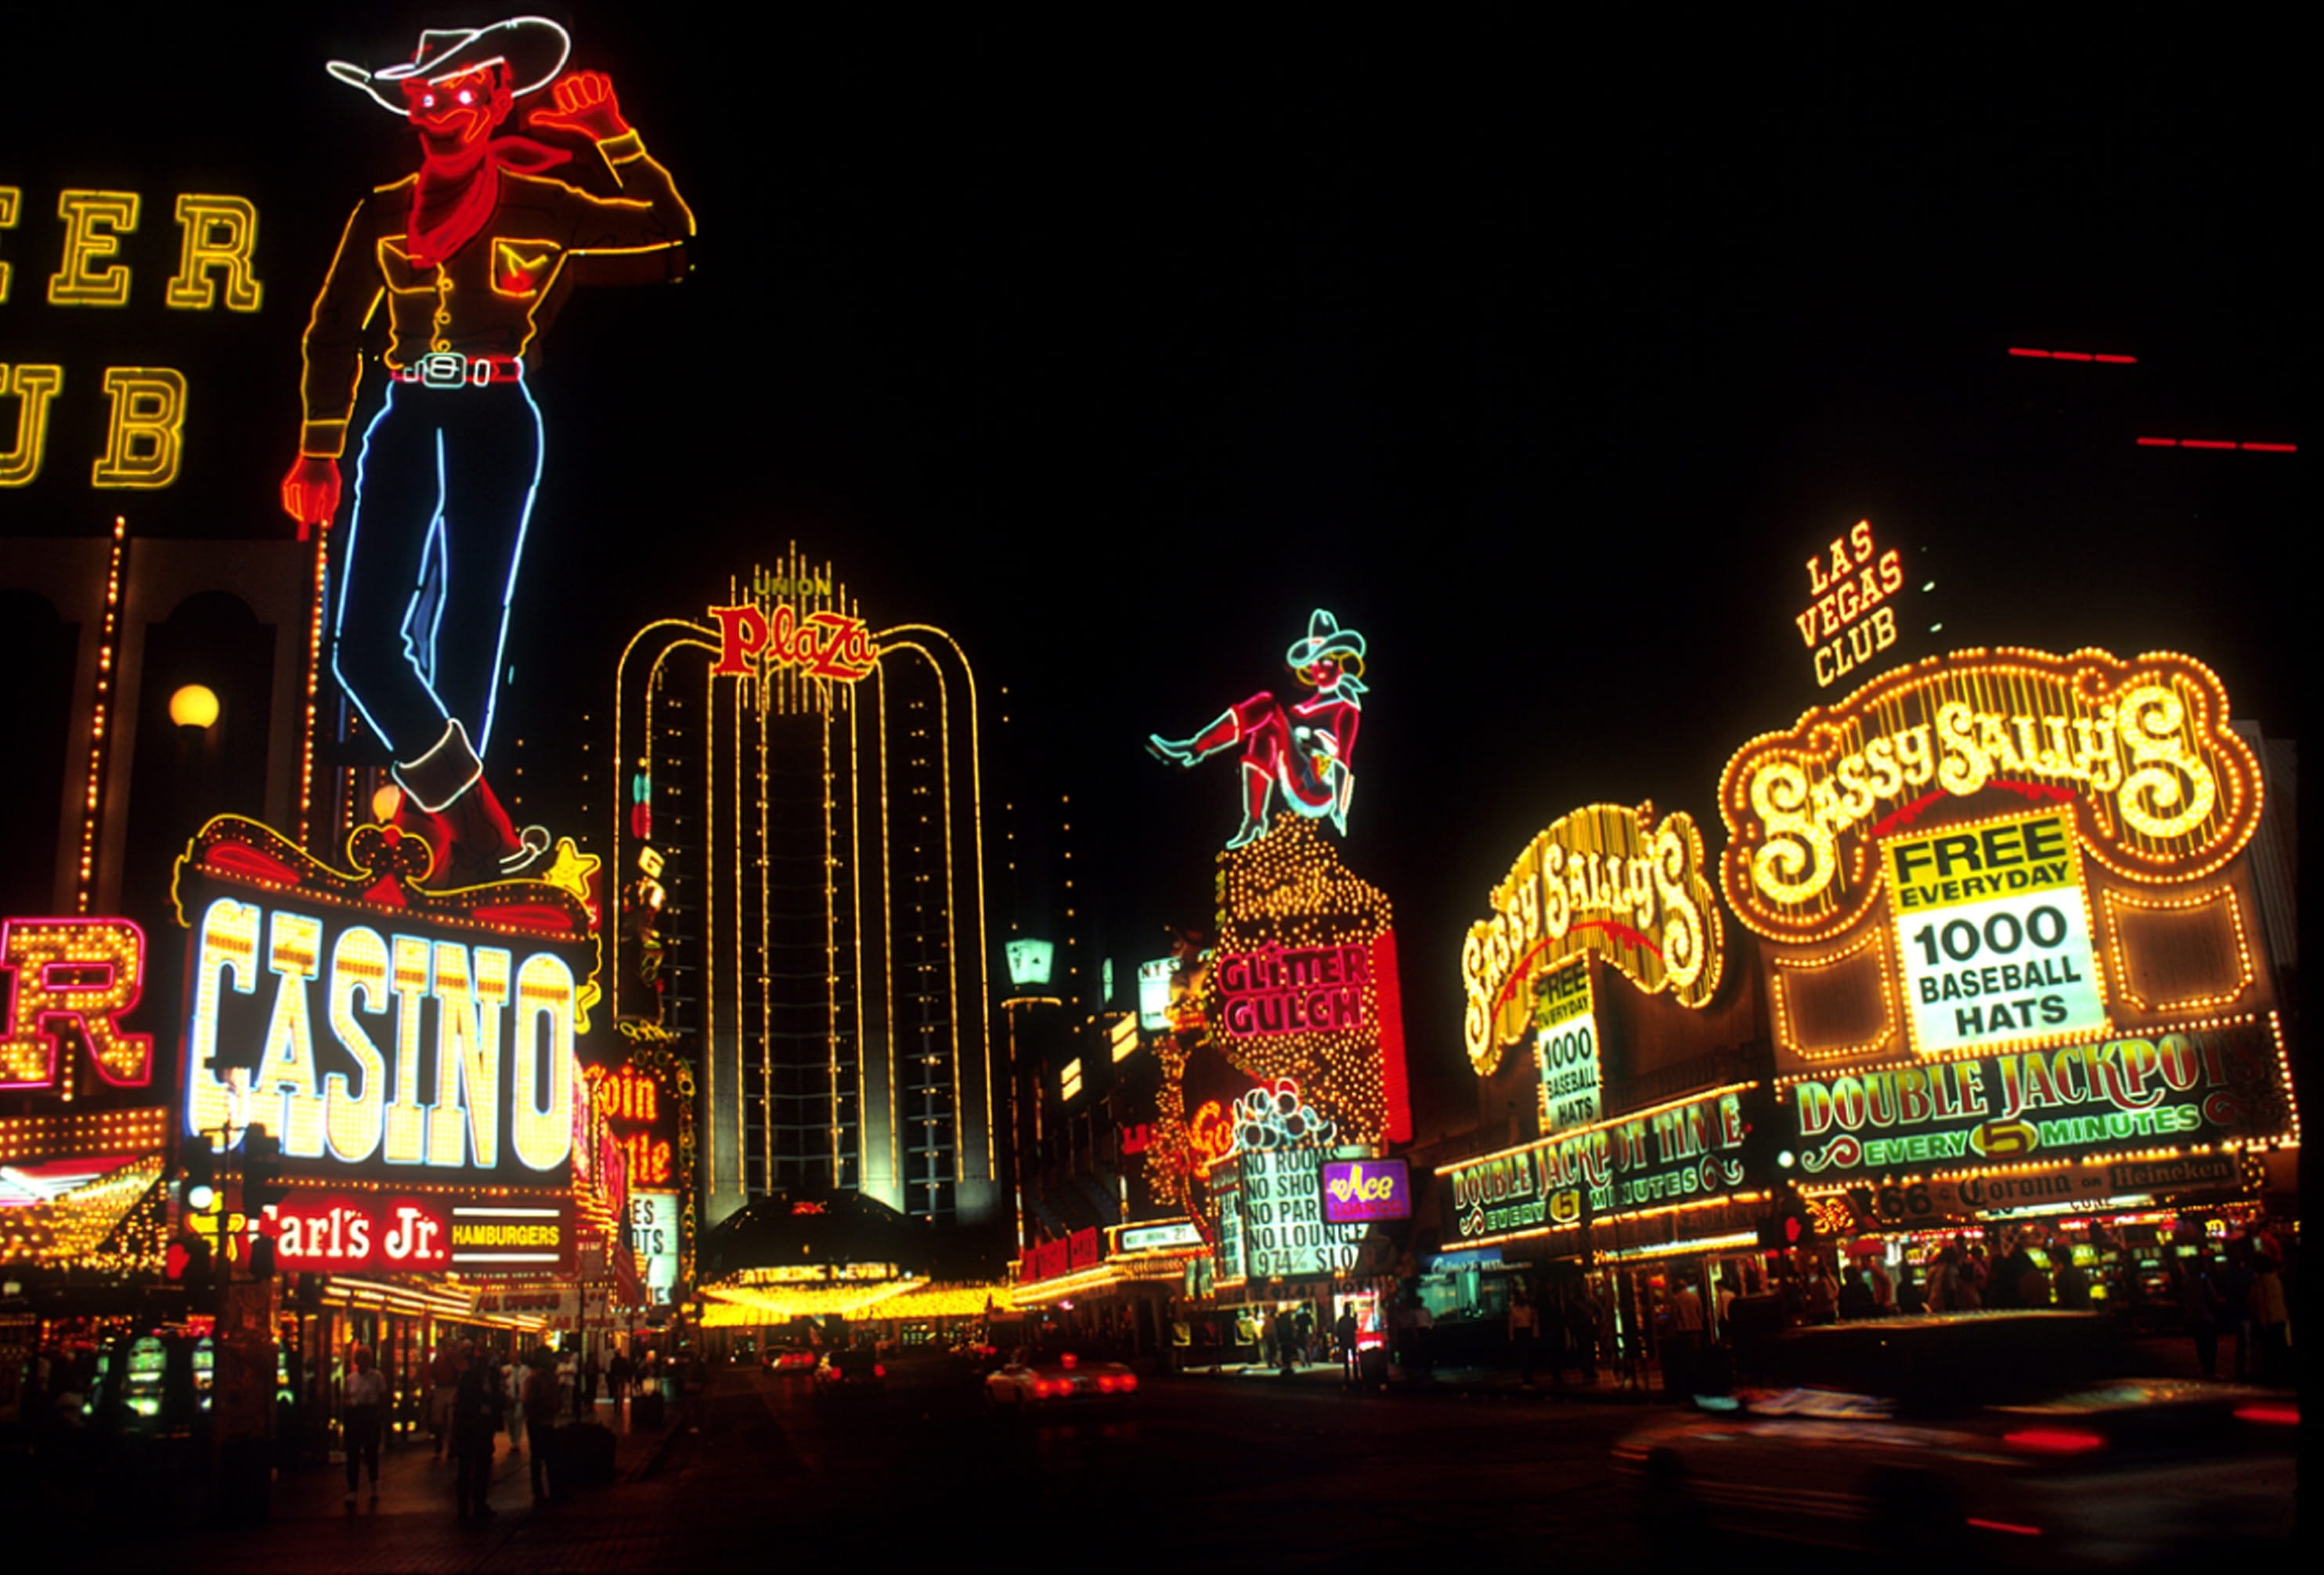 Casino in Las Vegas, night time, neon lights, casinos, sign, strip